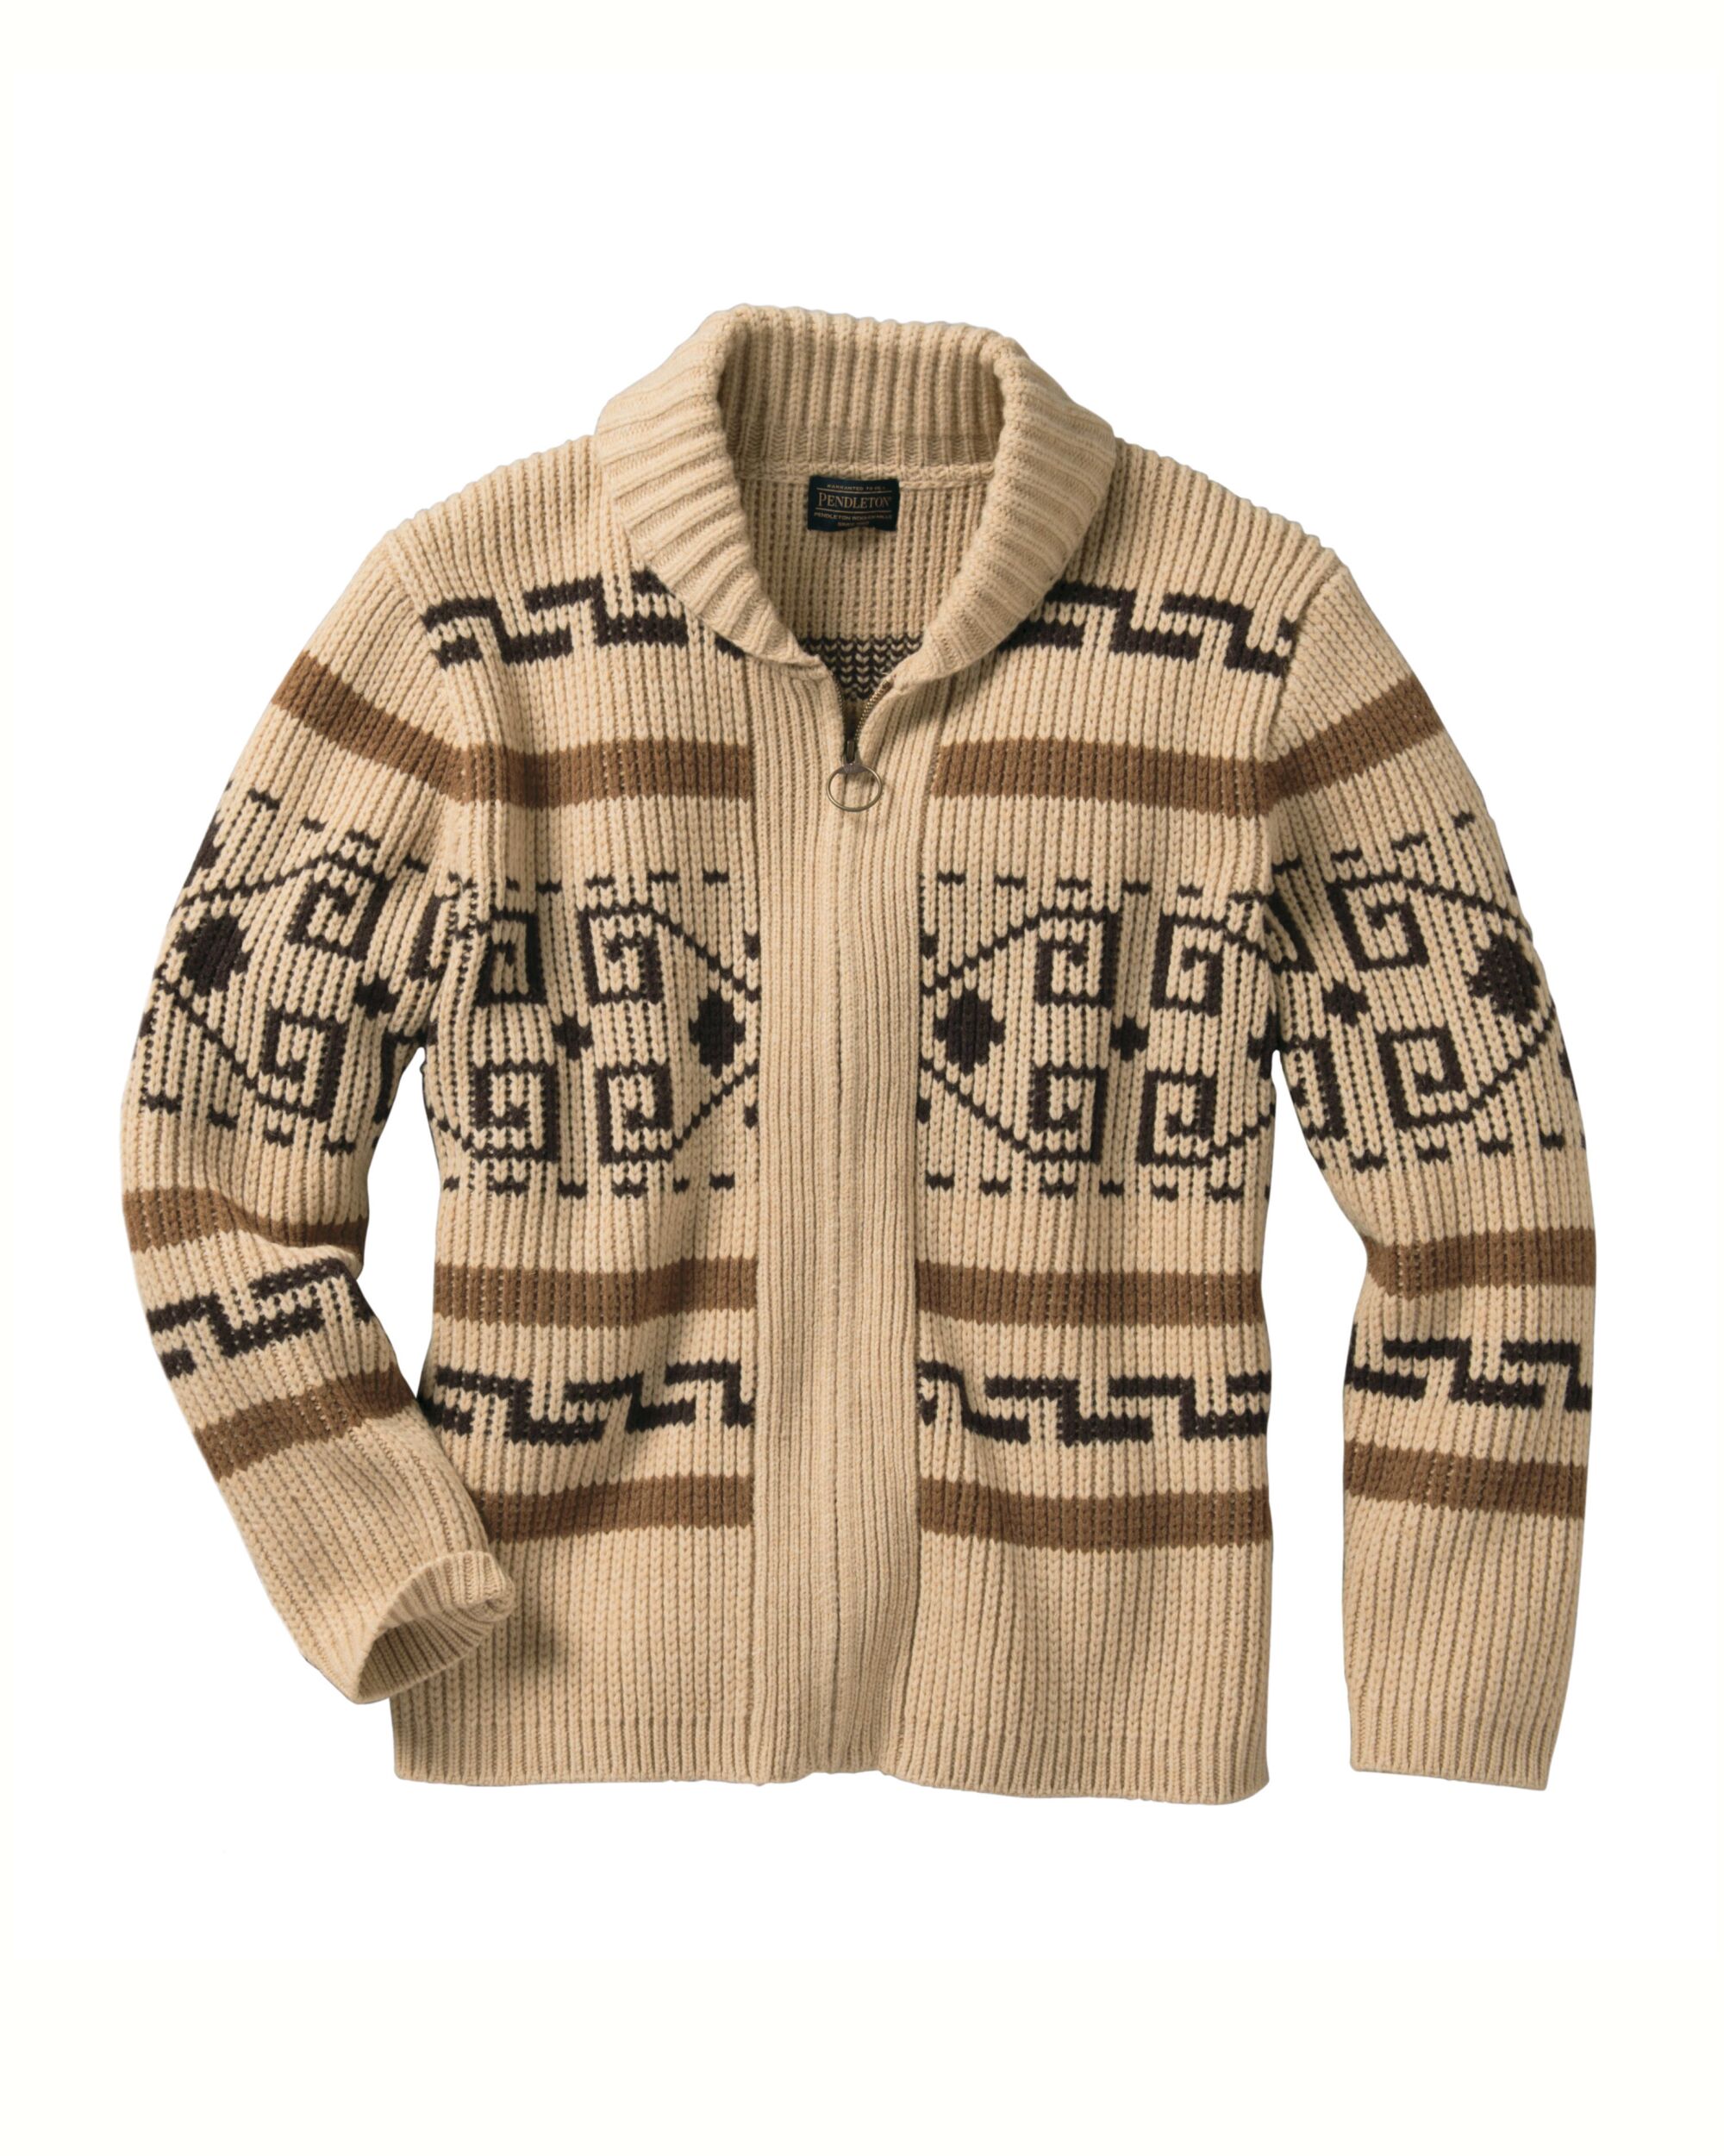 Original Westerly men's sweater by Pendelton